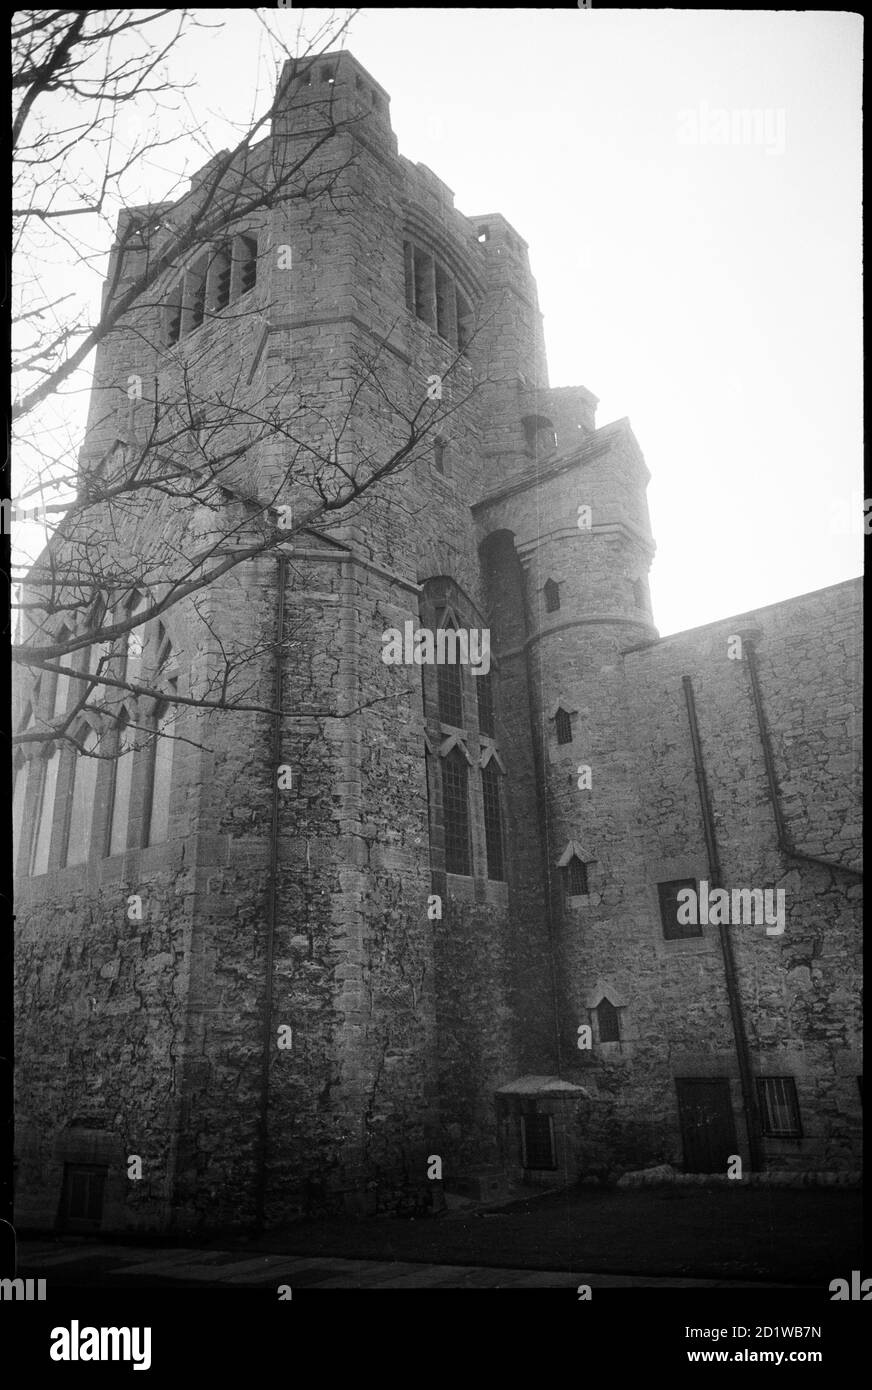 St Andrews Church, Park Avenue, Roker, Sunderland. Vista exterior de la torre de la Iglesia de San Andrés, vista desde el noreste. Foto de stock